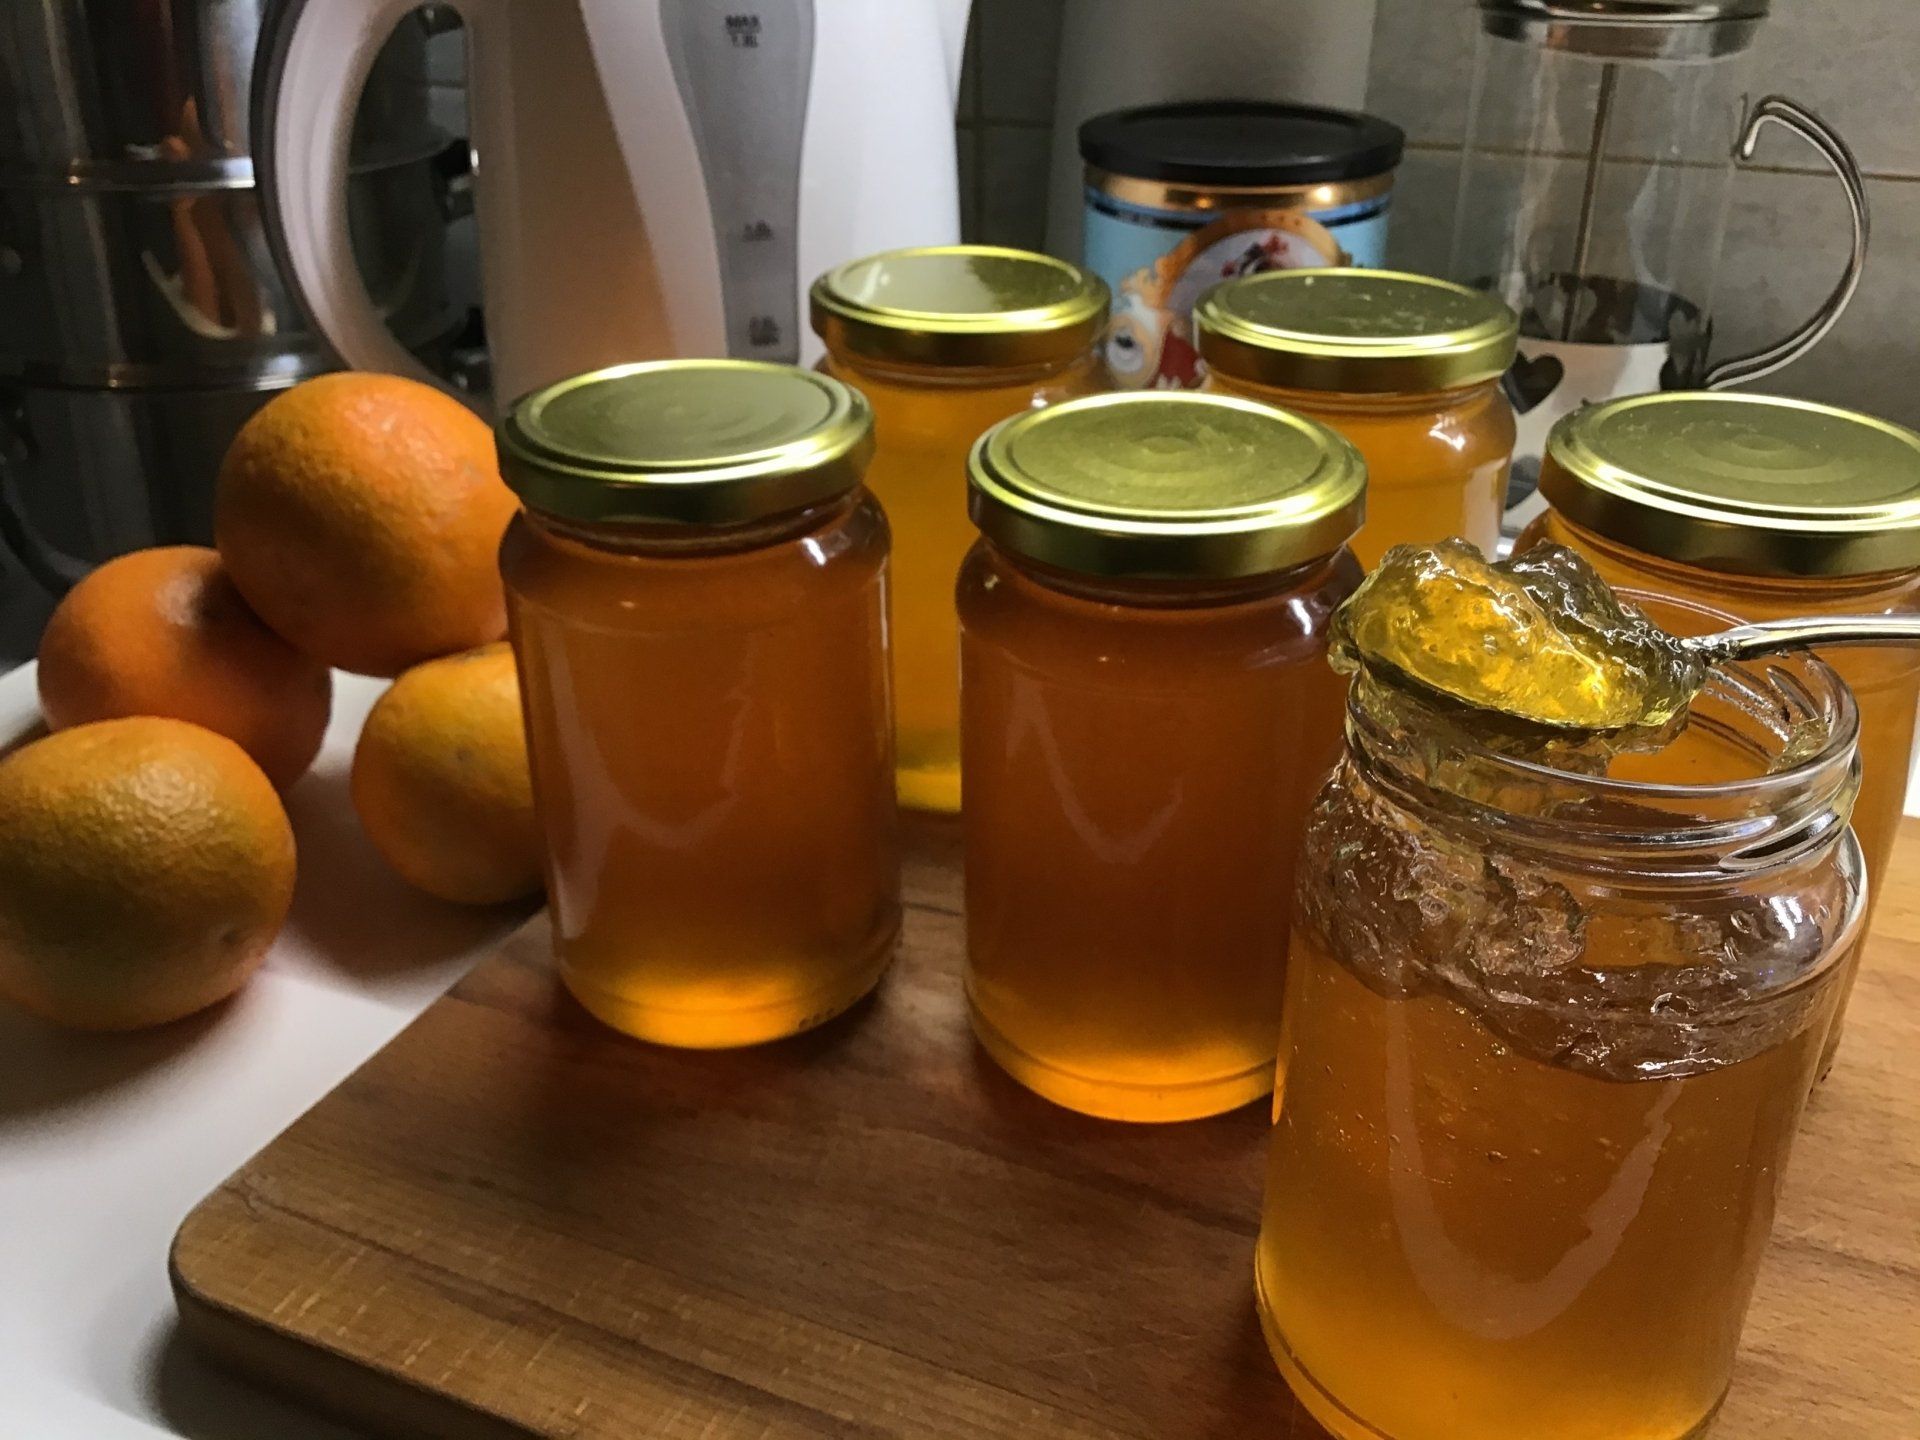 Homemade Neranja Orange Jelly  - making marmalade on Hydra Island Greece.